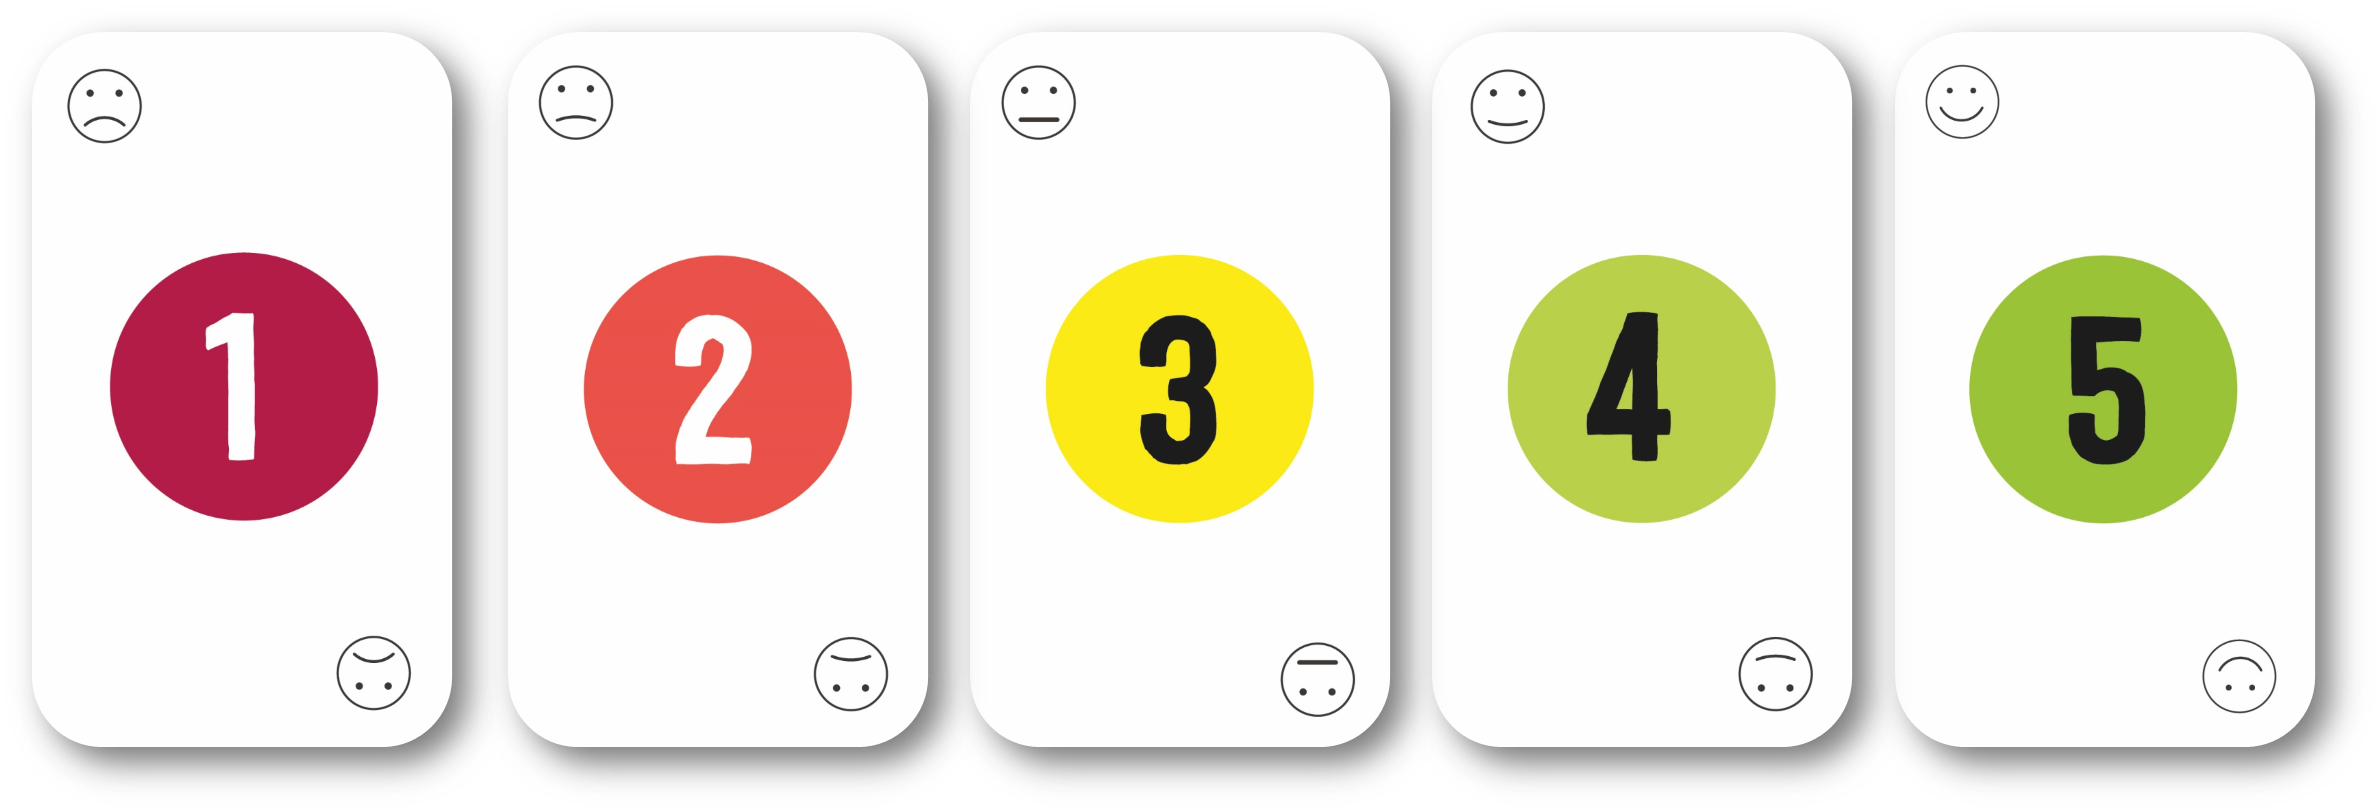 Five emoji voting cards